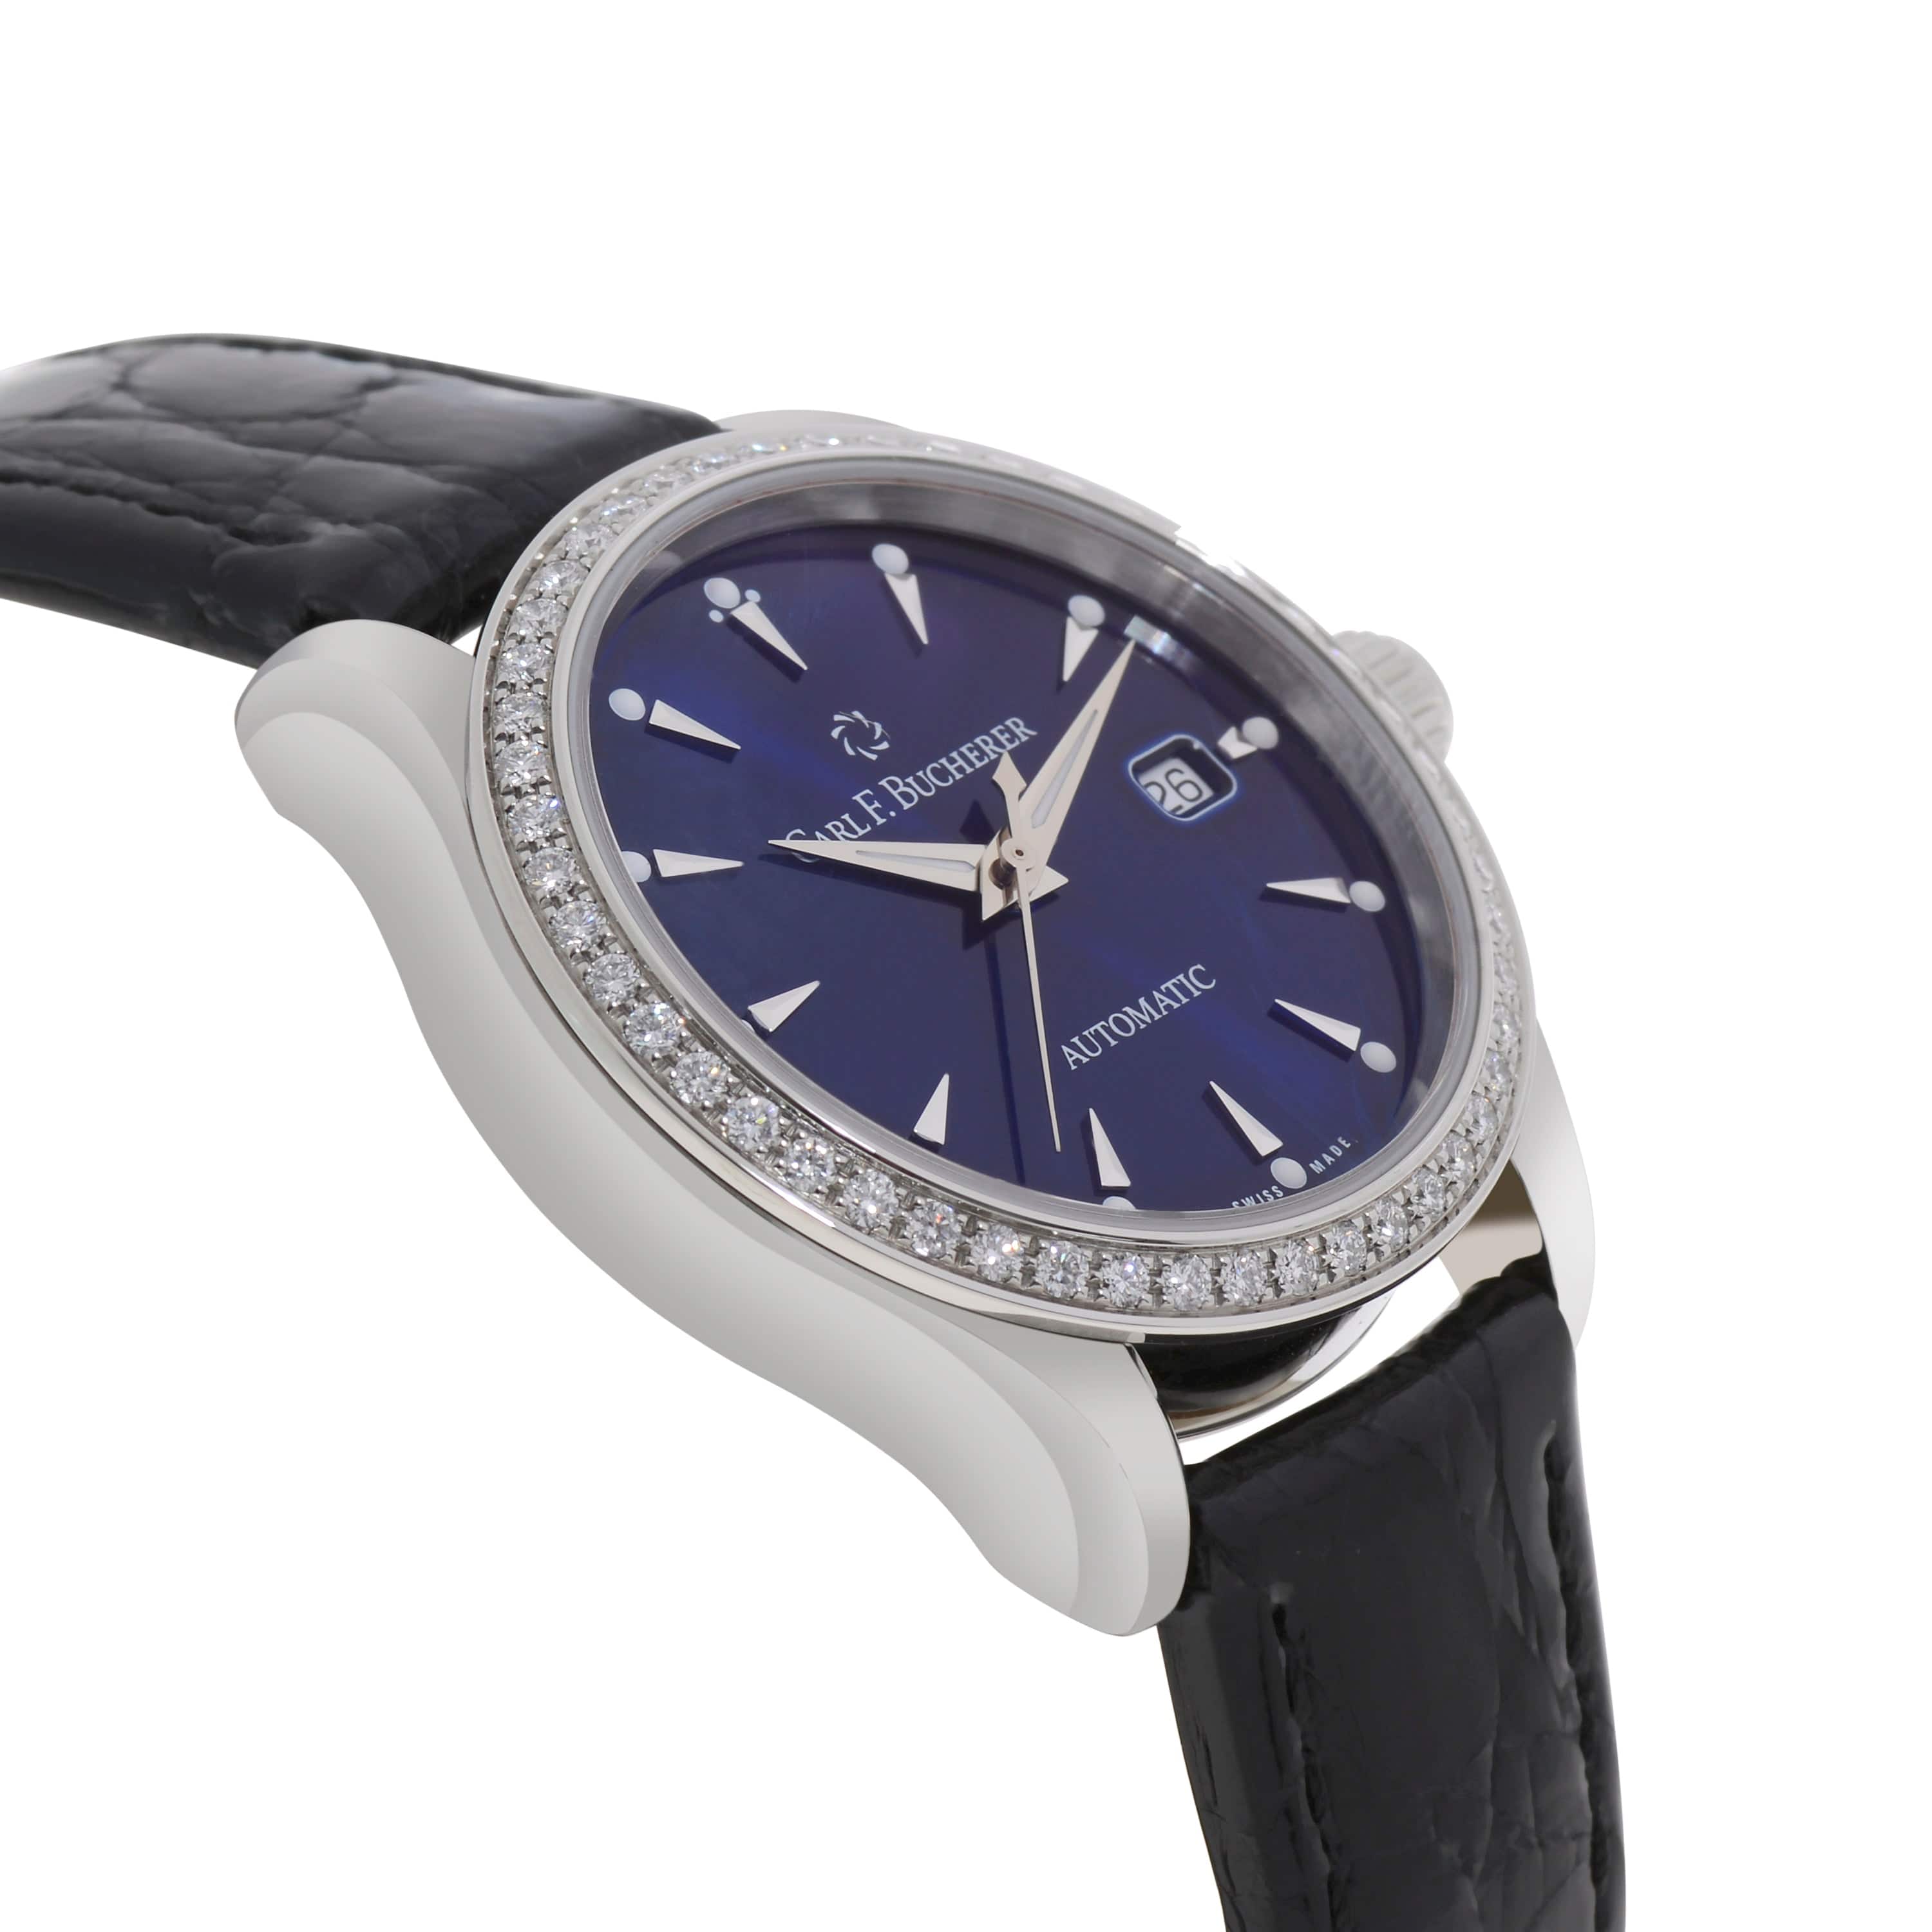 Carl F. Bucherer Manero AutoDate Diamond Blue Dial Stainless Steel Women's Automatic Watch 00.10911.08.53.11 - THE SOLIST